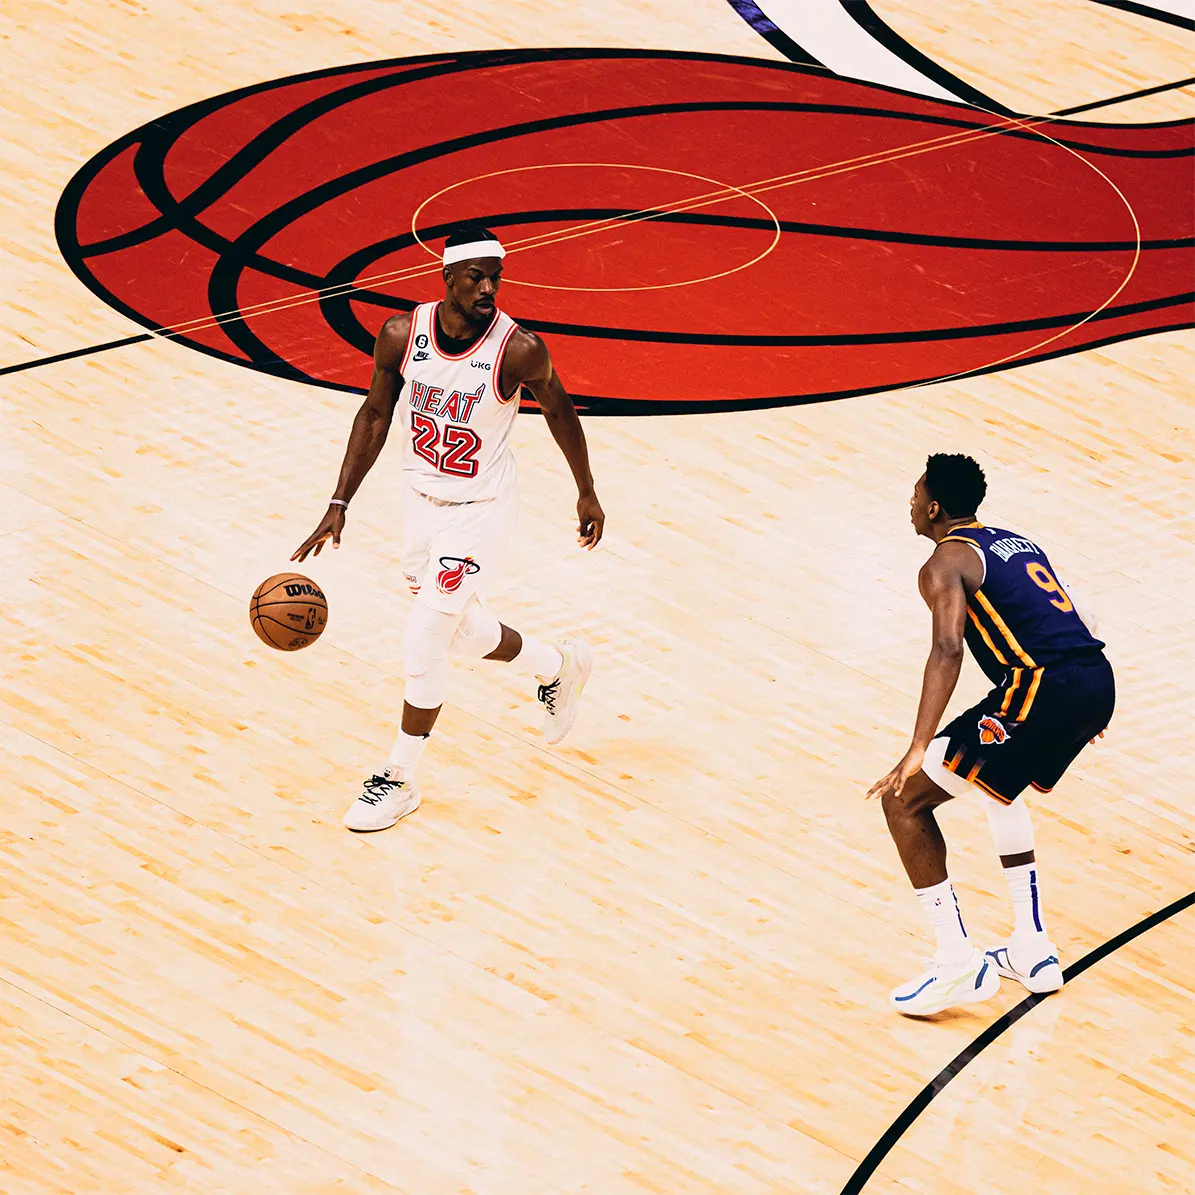 Onde assistir NBA: Cleveland Cavaliers x New York Knicks – Jogo 4